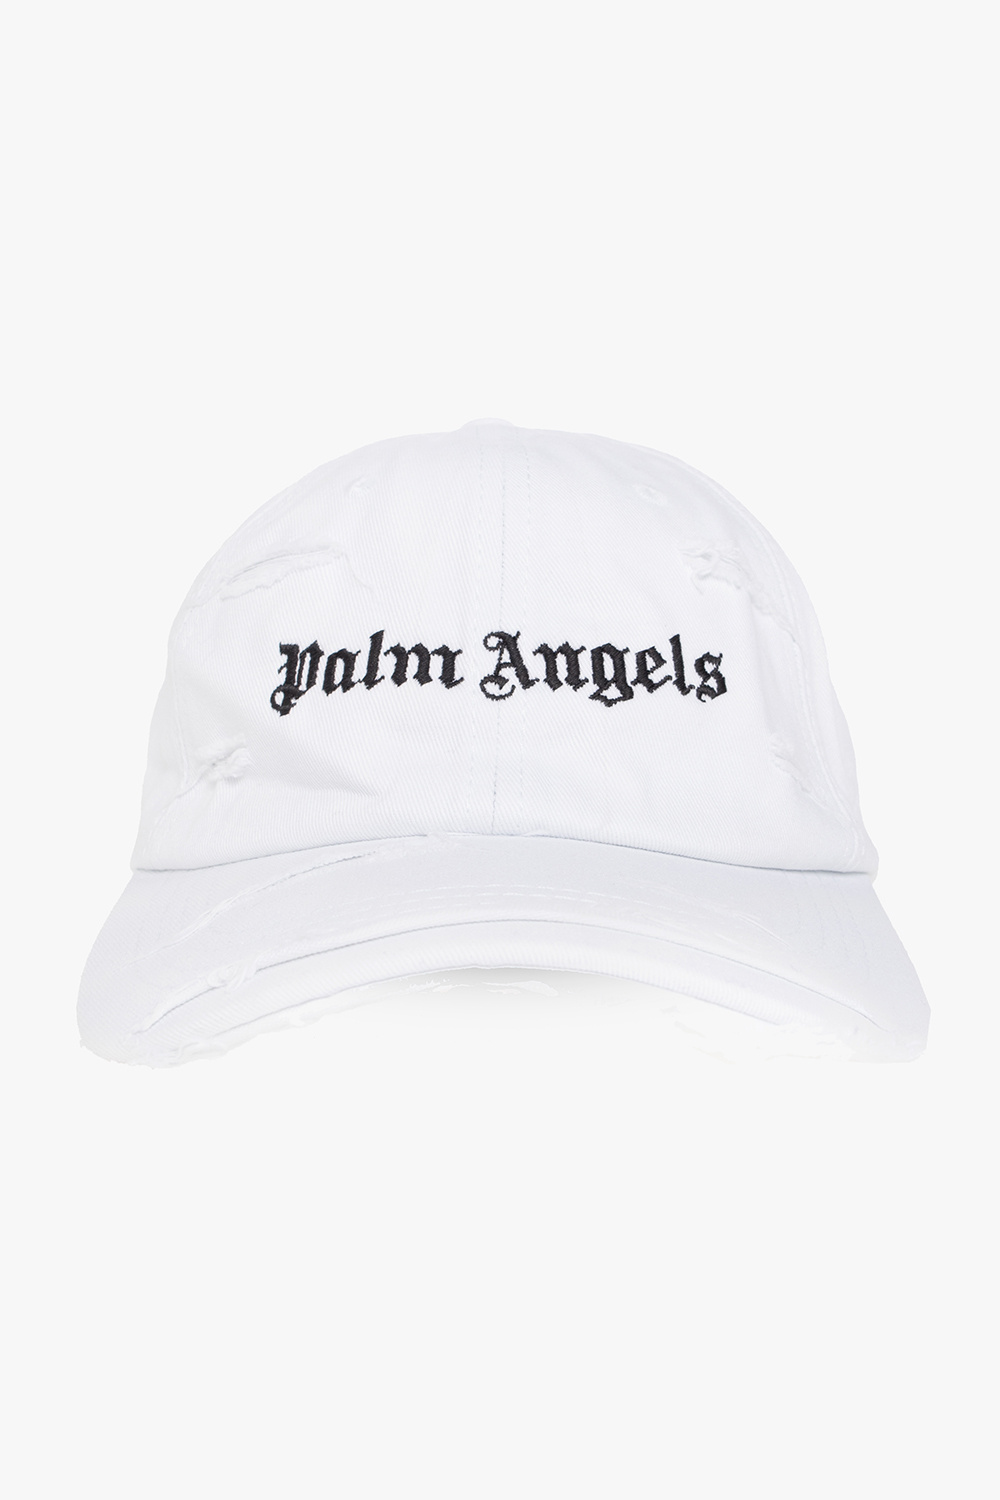 Palm Angels men cups caps robes pouches